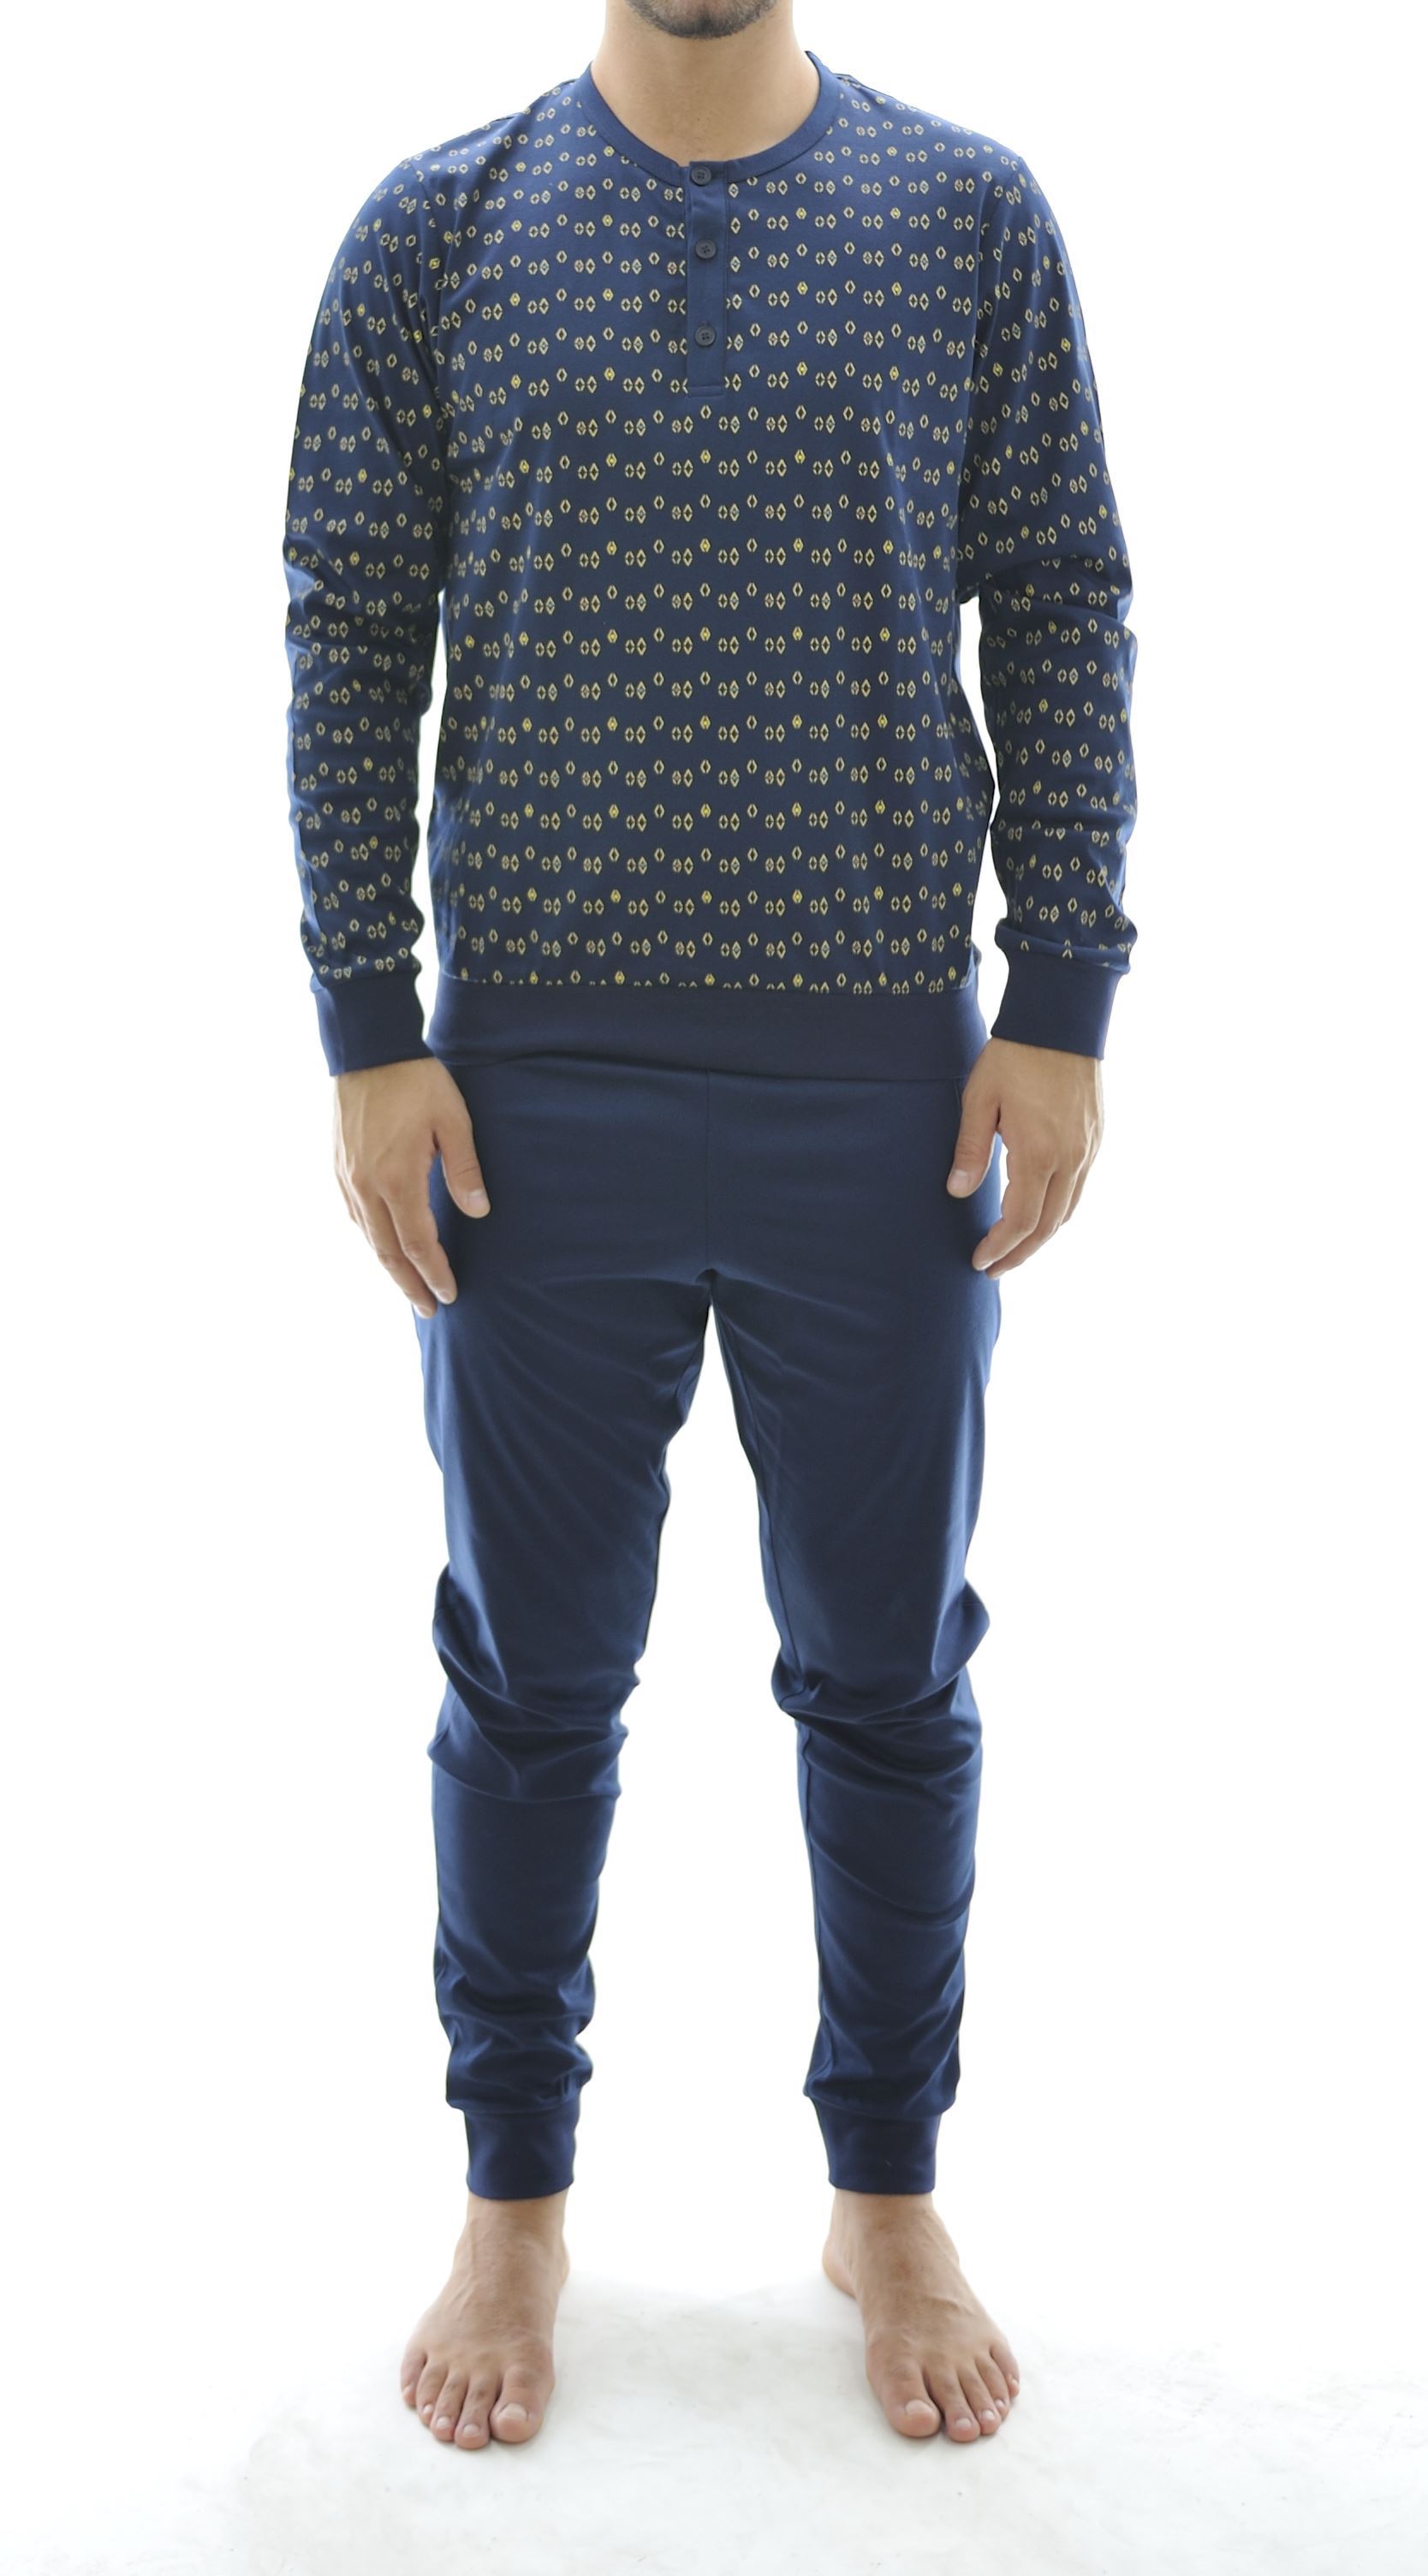 Picture of Men's Pyjamas, pattern on blue background